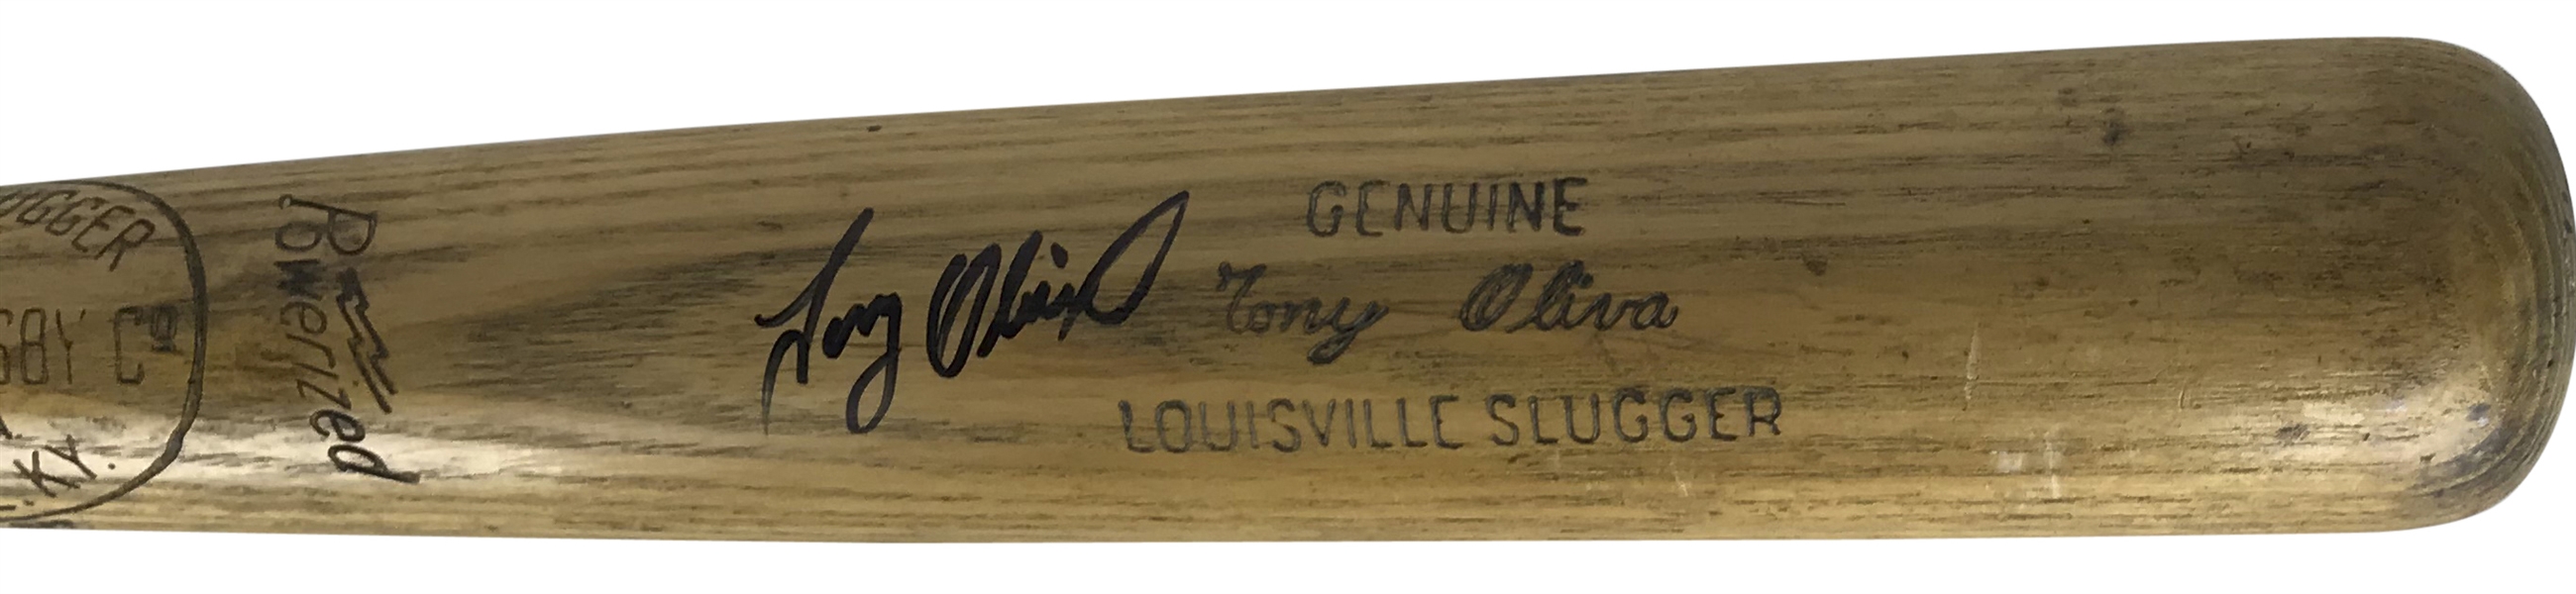 Tony Oliva ULTRA-RARE Signed & Game Used 1964 Rookie of the Year D2 Baseball Bat PSA/DNA GU 9!